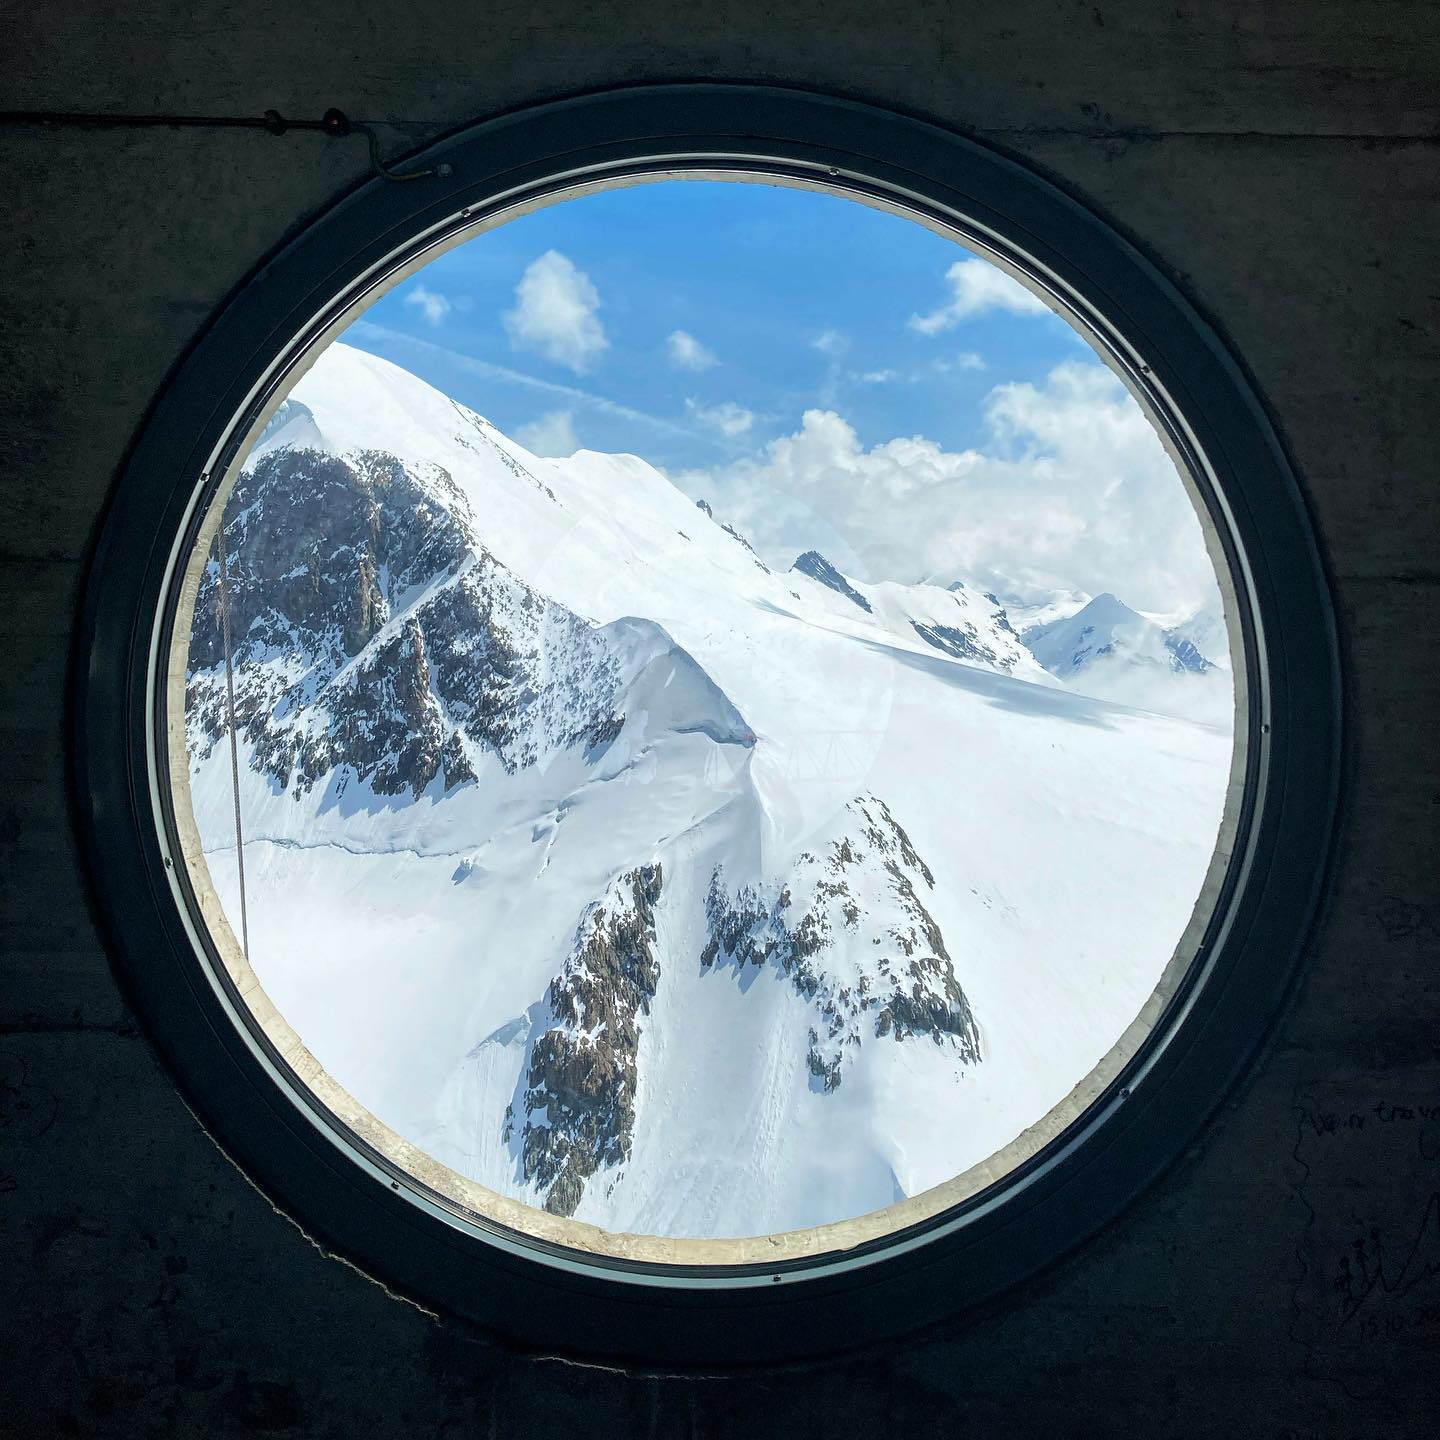 Window to the Alps. 
________________
#ChinnykatHoneymoon #zermattswitzerland #glacierparadise #alpine